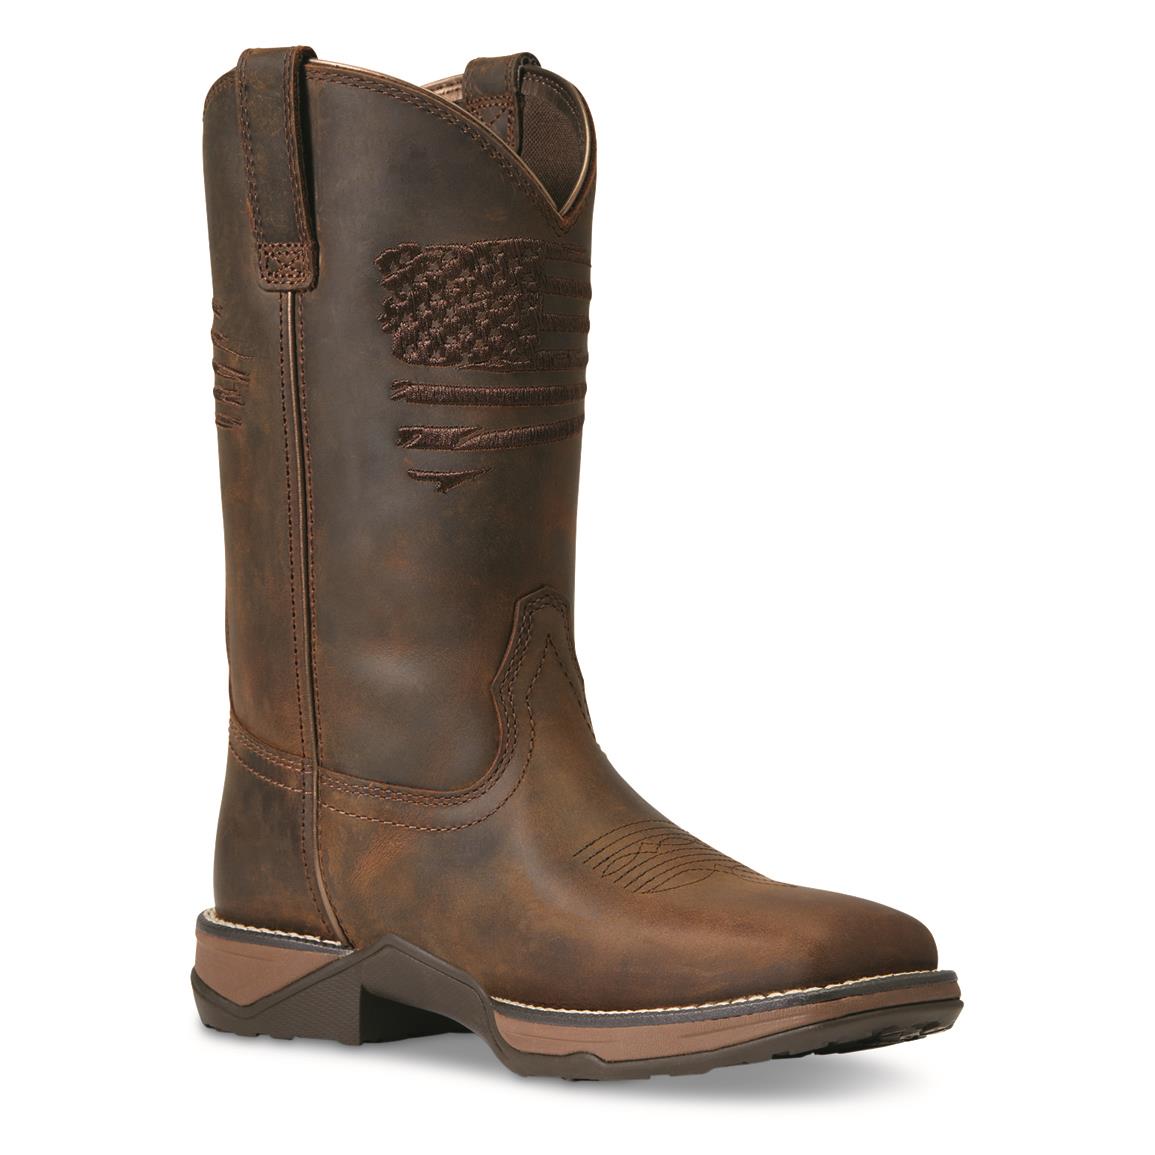 Ariat Women's Anthem Patriot Western Boots, Distressed Brown